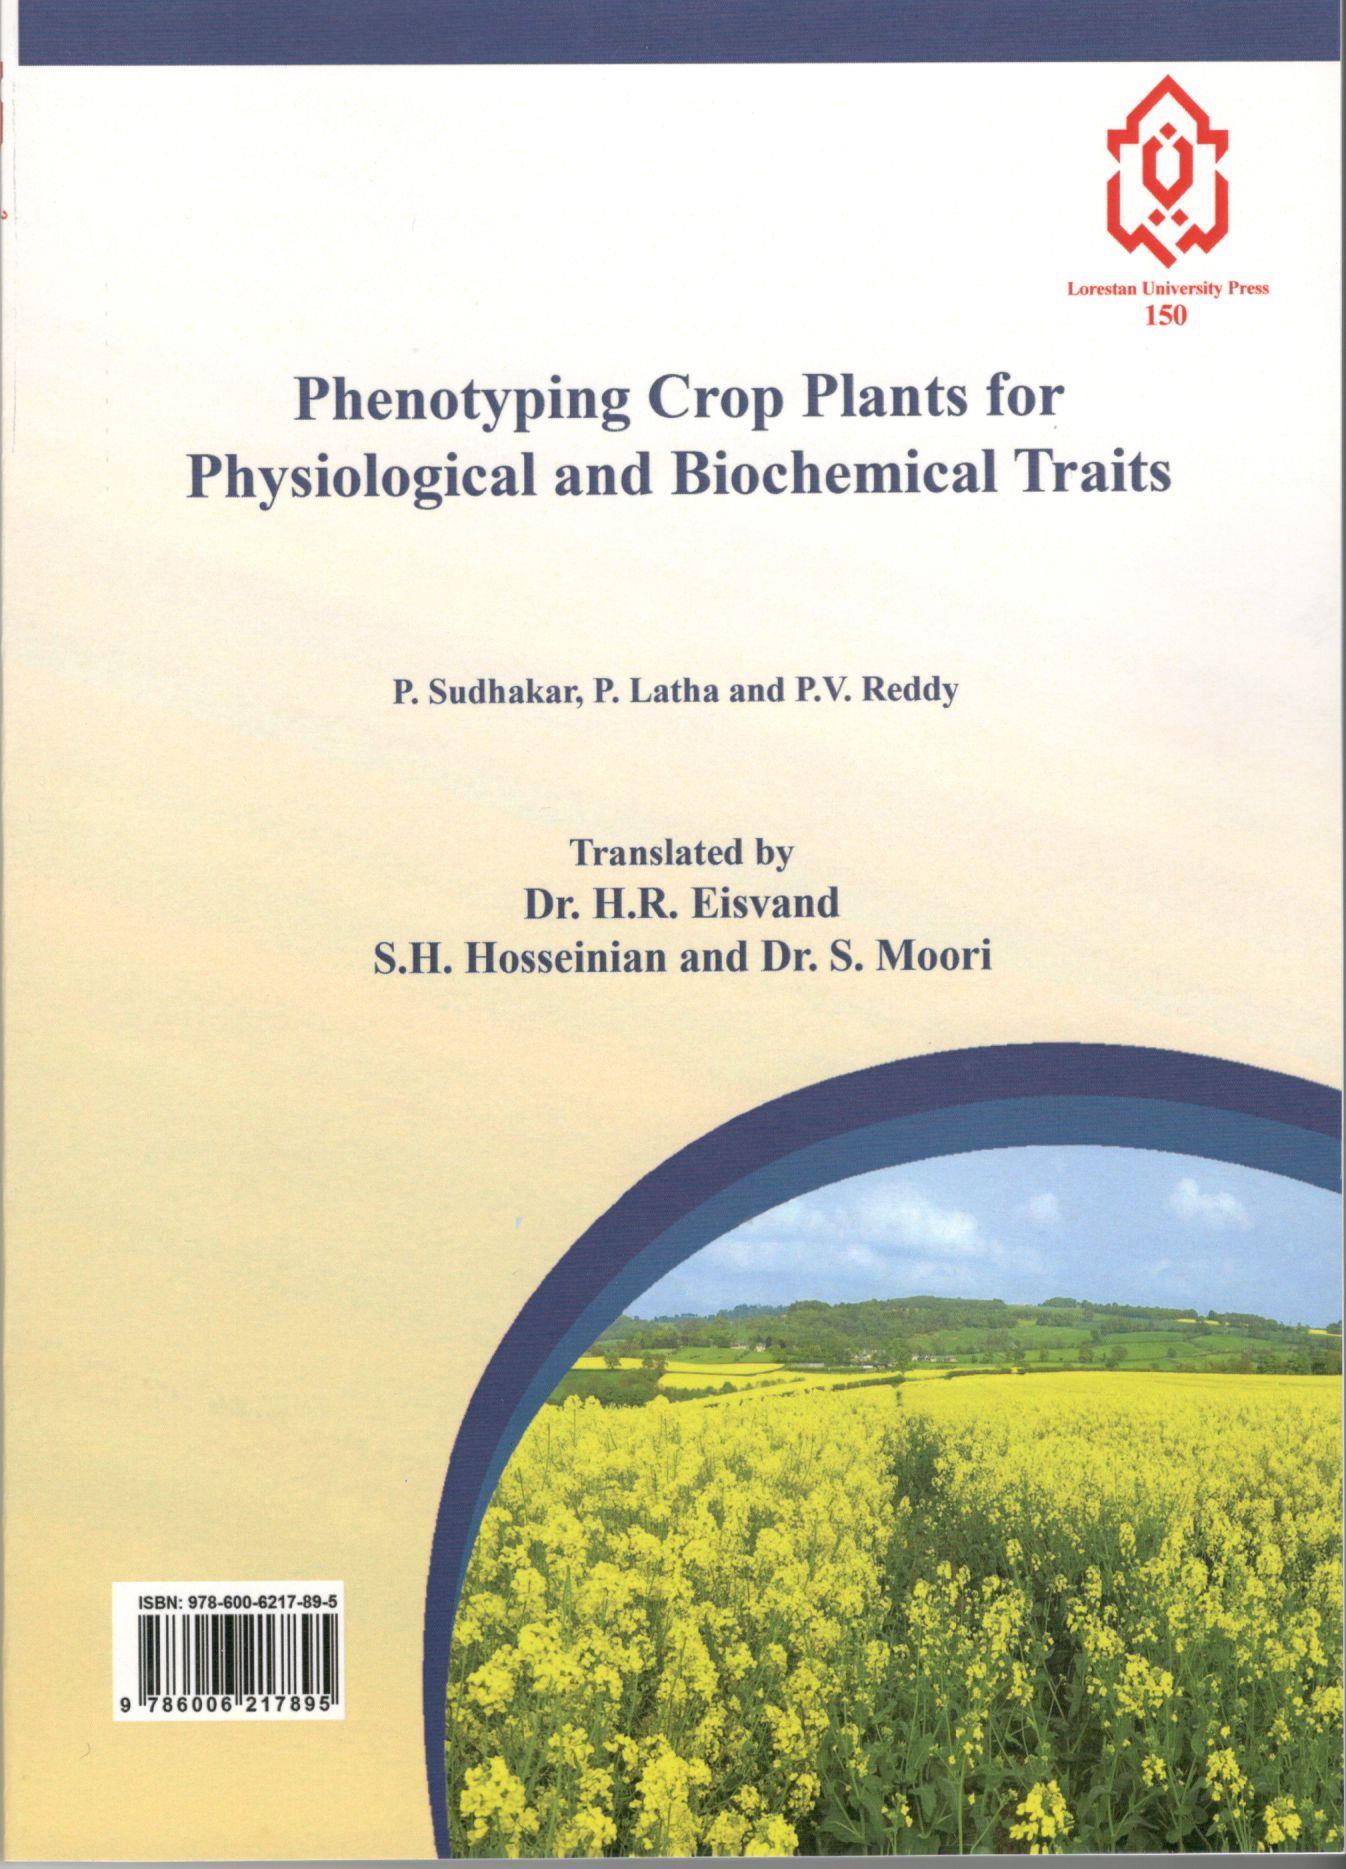 Phenotyping Corp نباتات الصفات الفسیولوجیة والکیمیائیة الحیویة